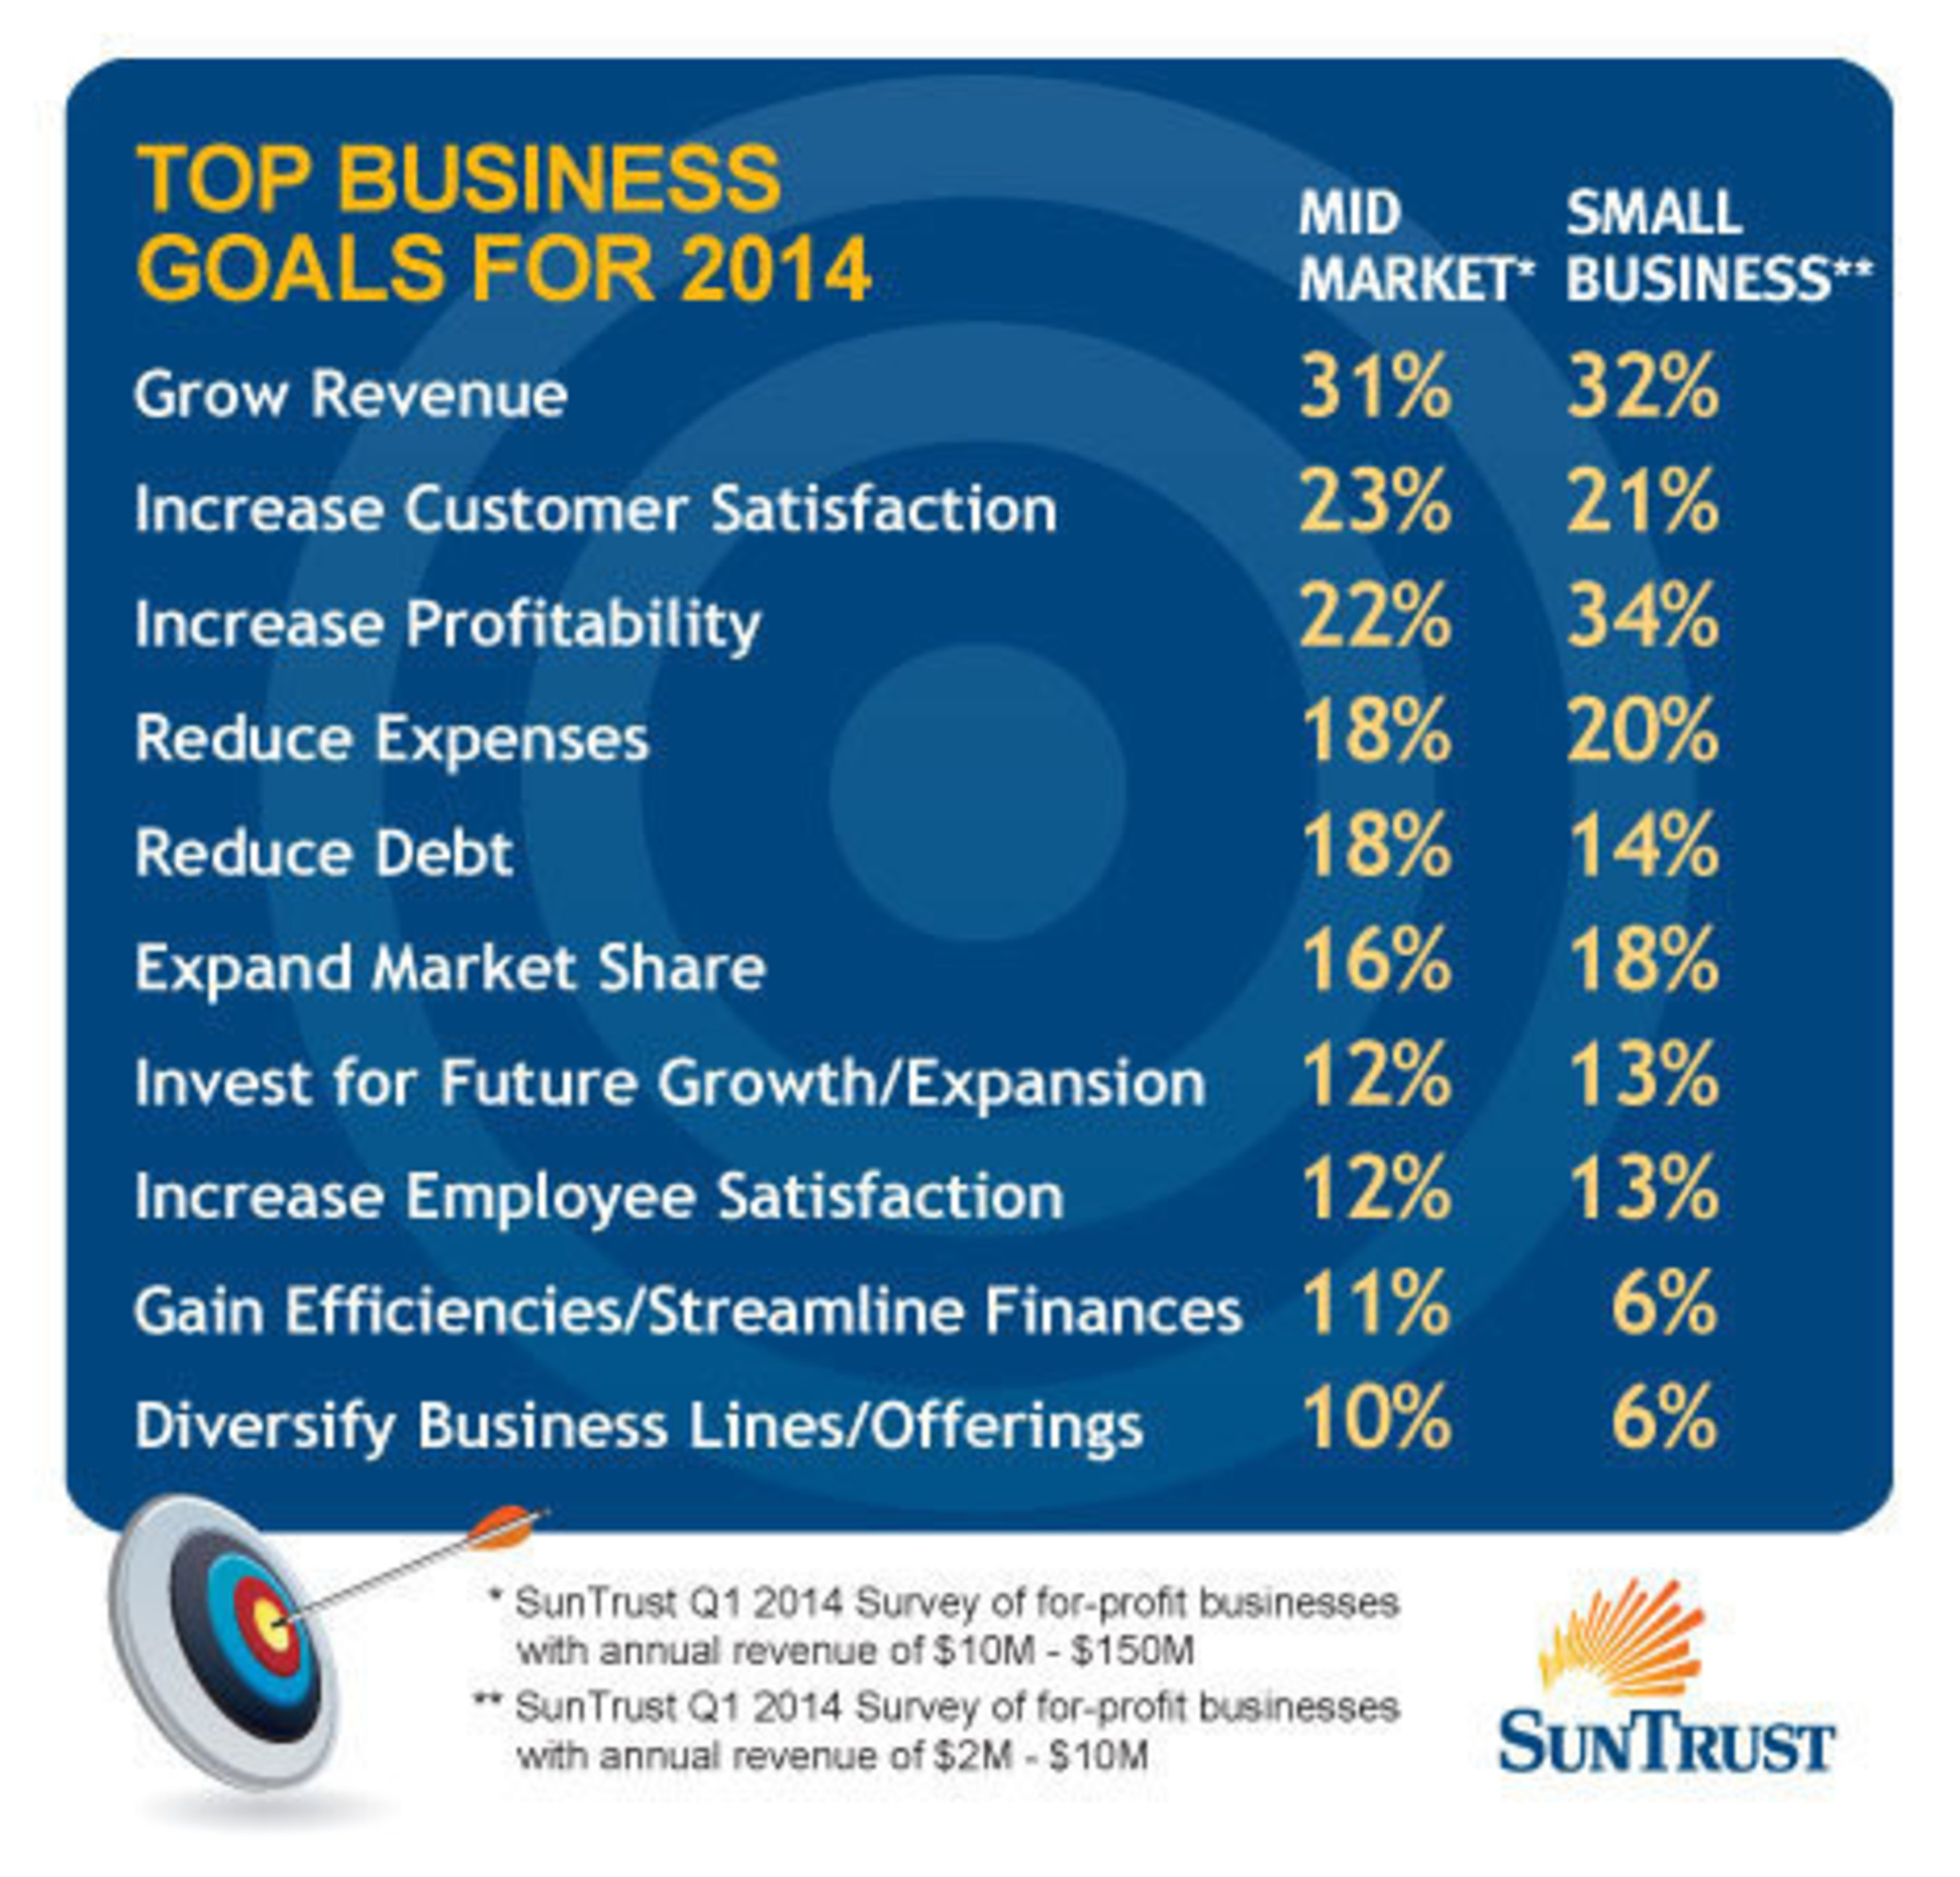 Top Business Goals For 2014 (PRNewsFoto/SunTrust Banks, Inc.)